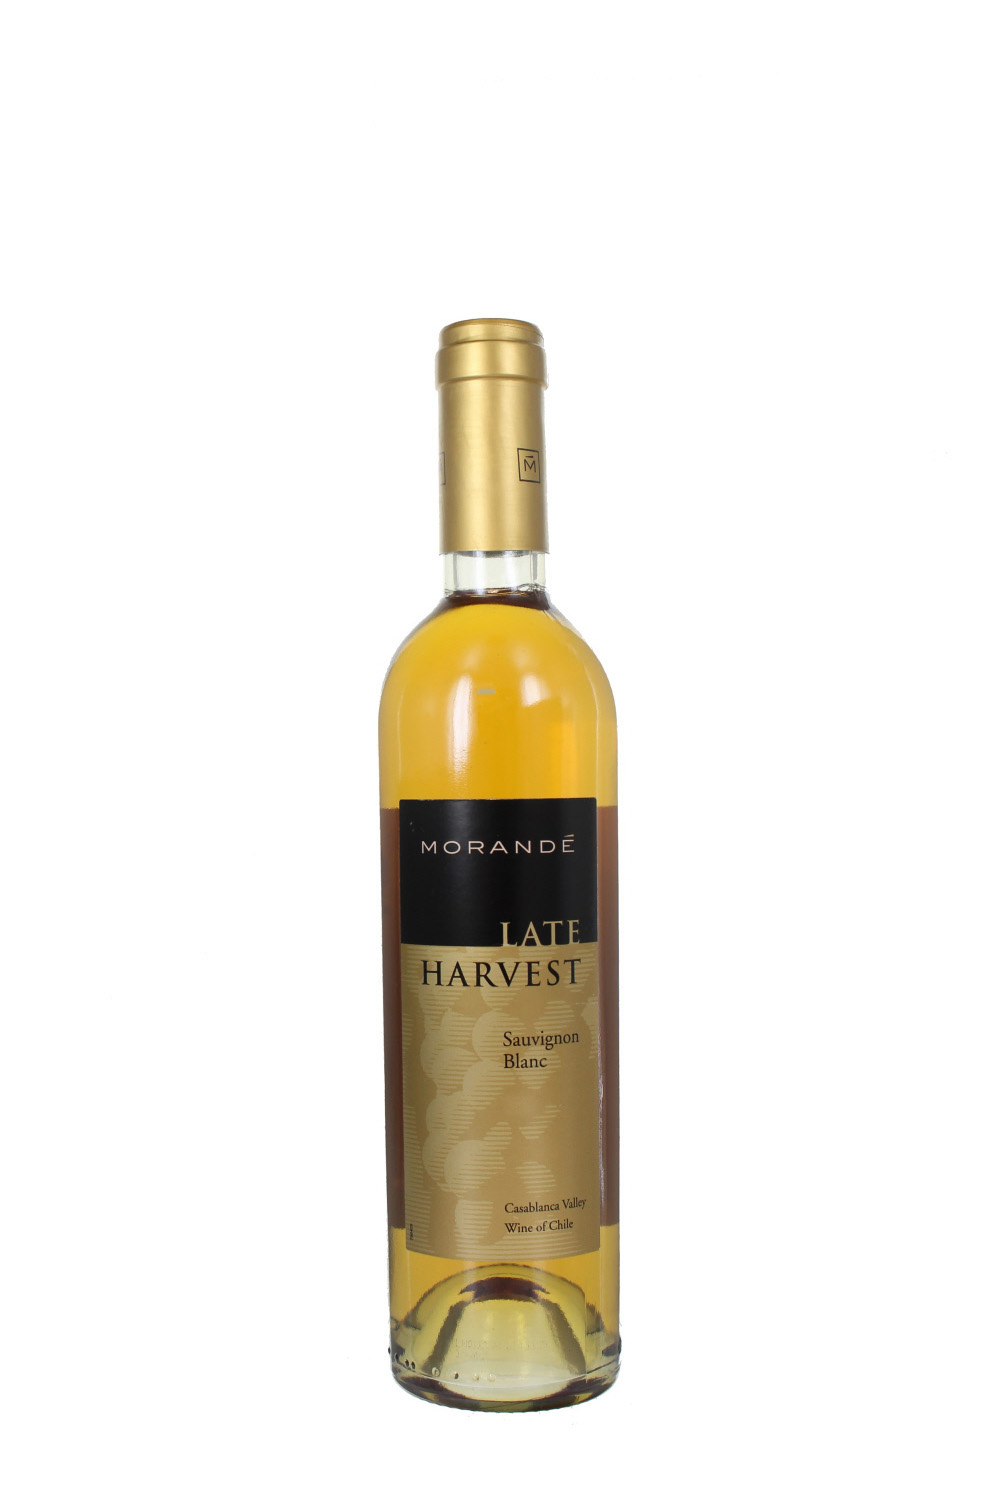 2015 Morande Late Harvest, Sauvignon Blanc, Casablanca, Morande (Case)